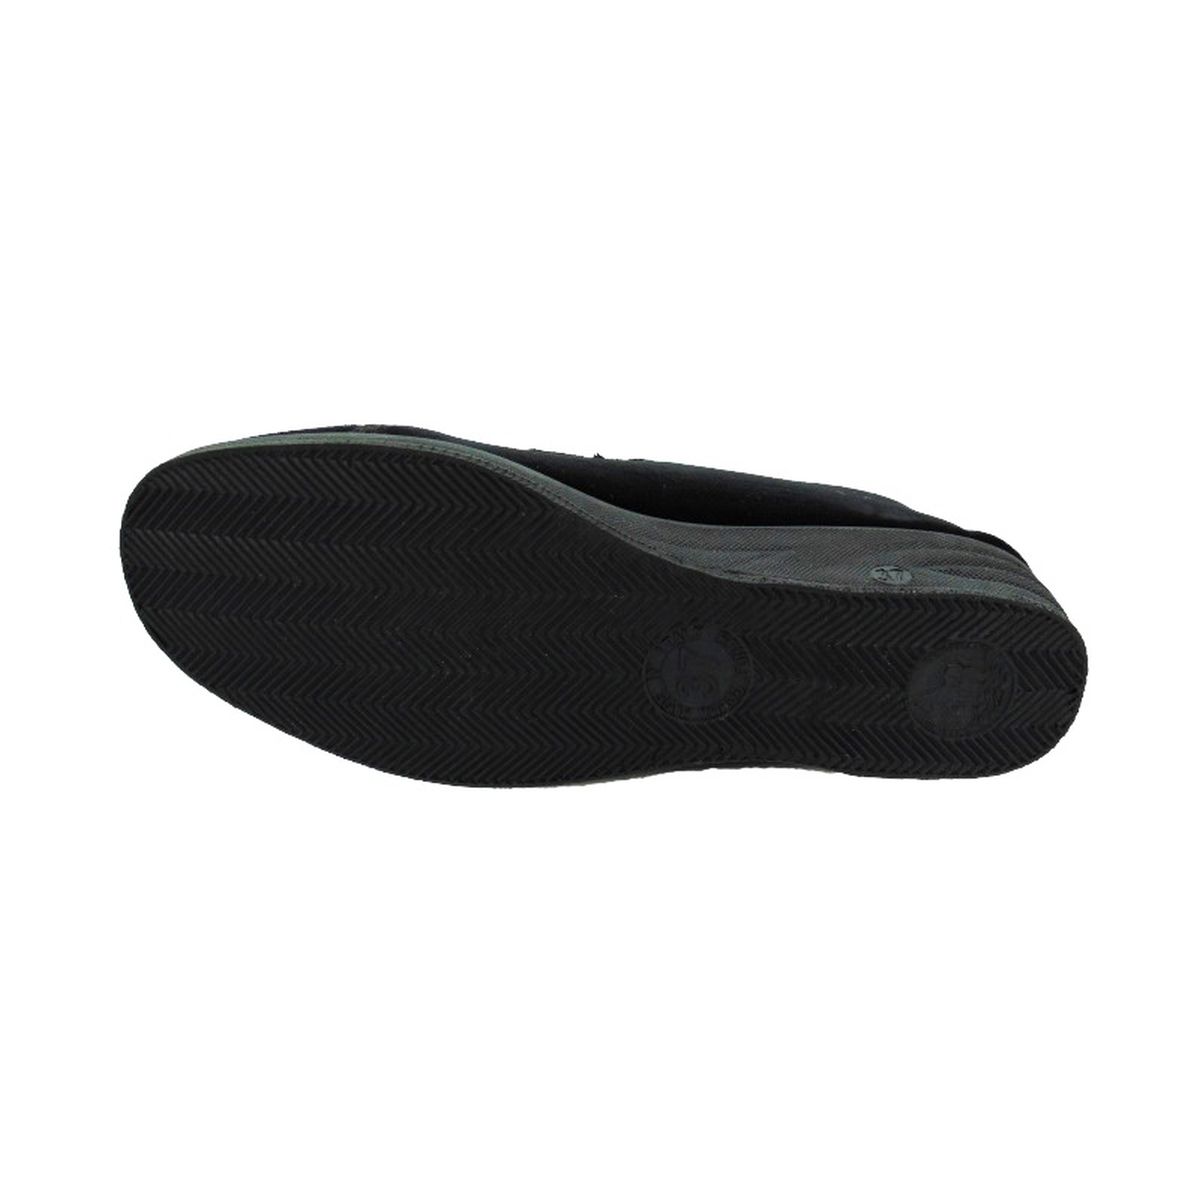 Pantofola Donna Velluto nero, Interno lana, con strappo Emanuela 536 Neroimg_4